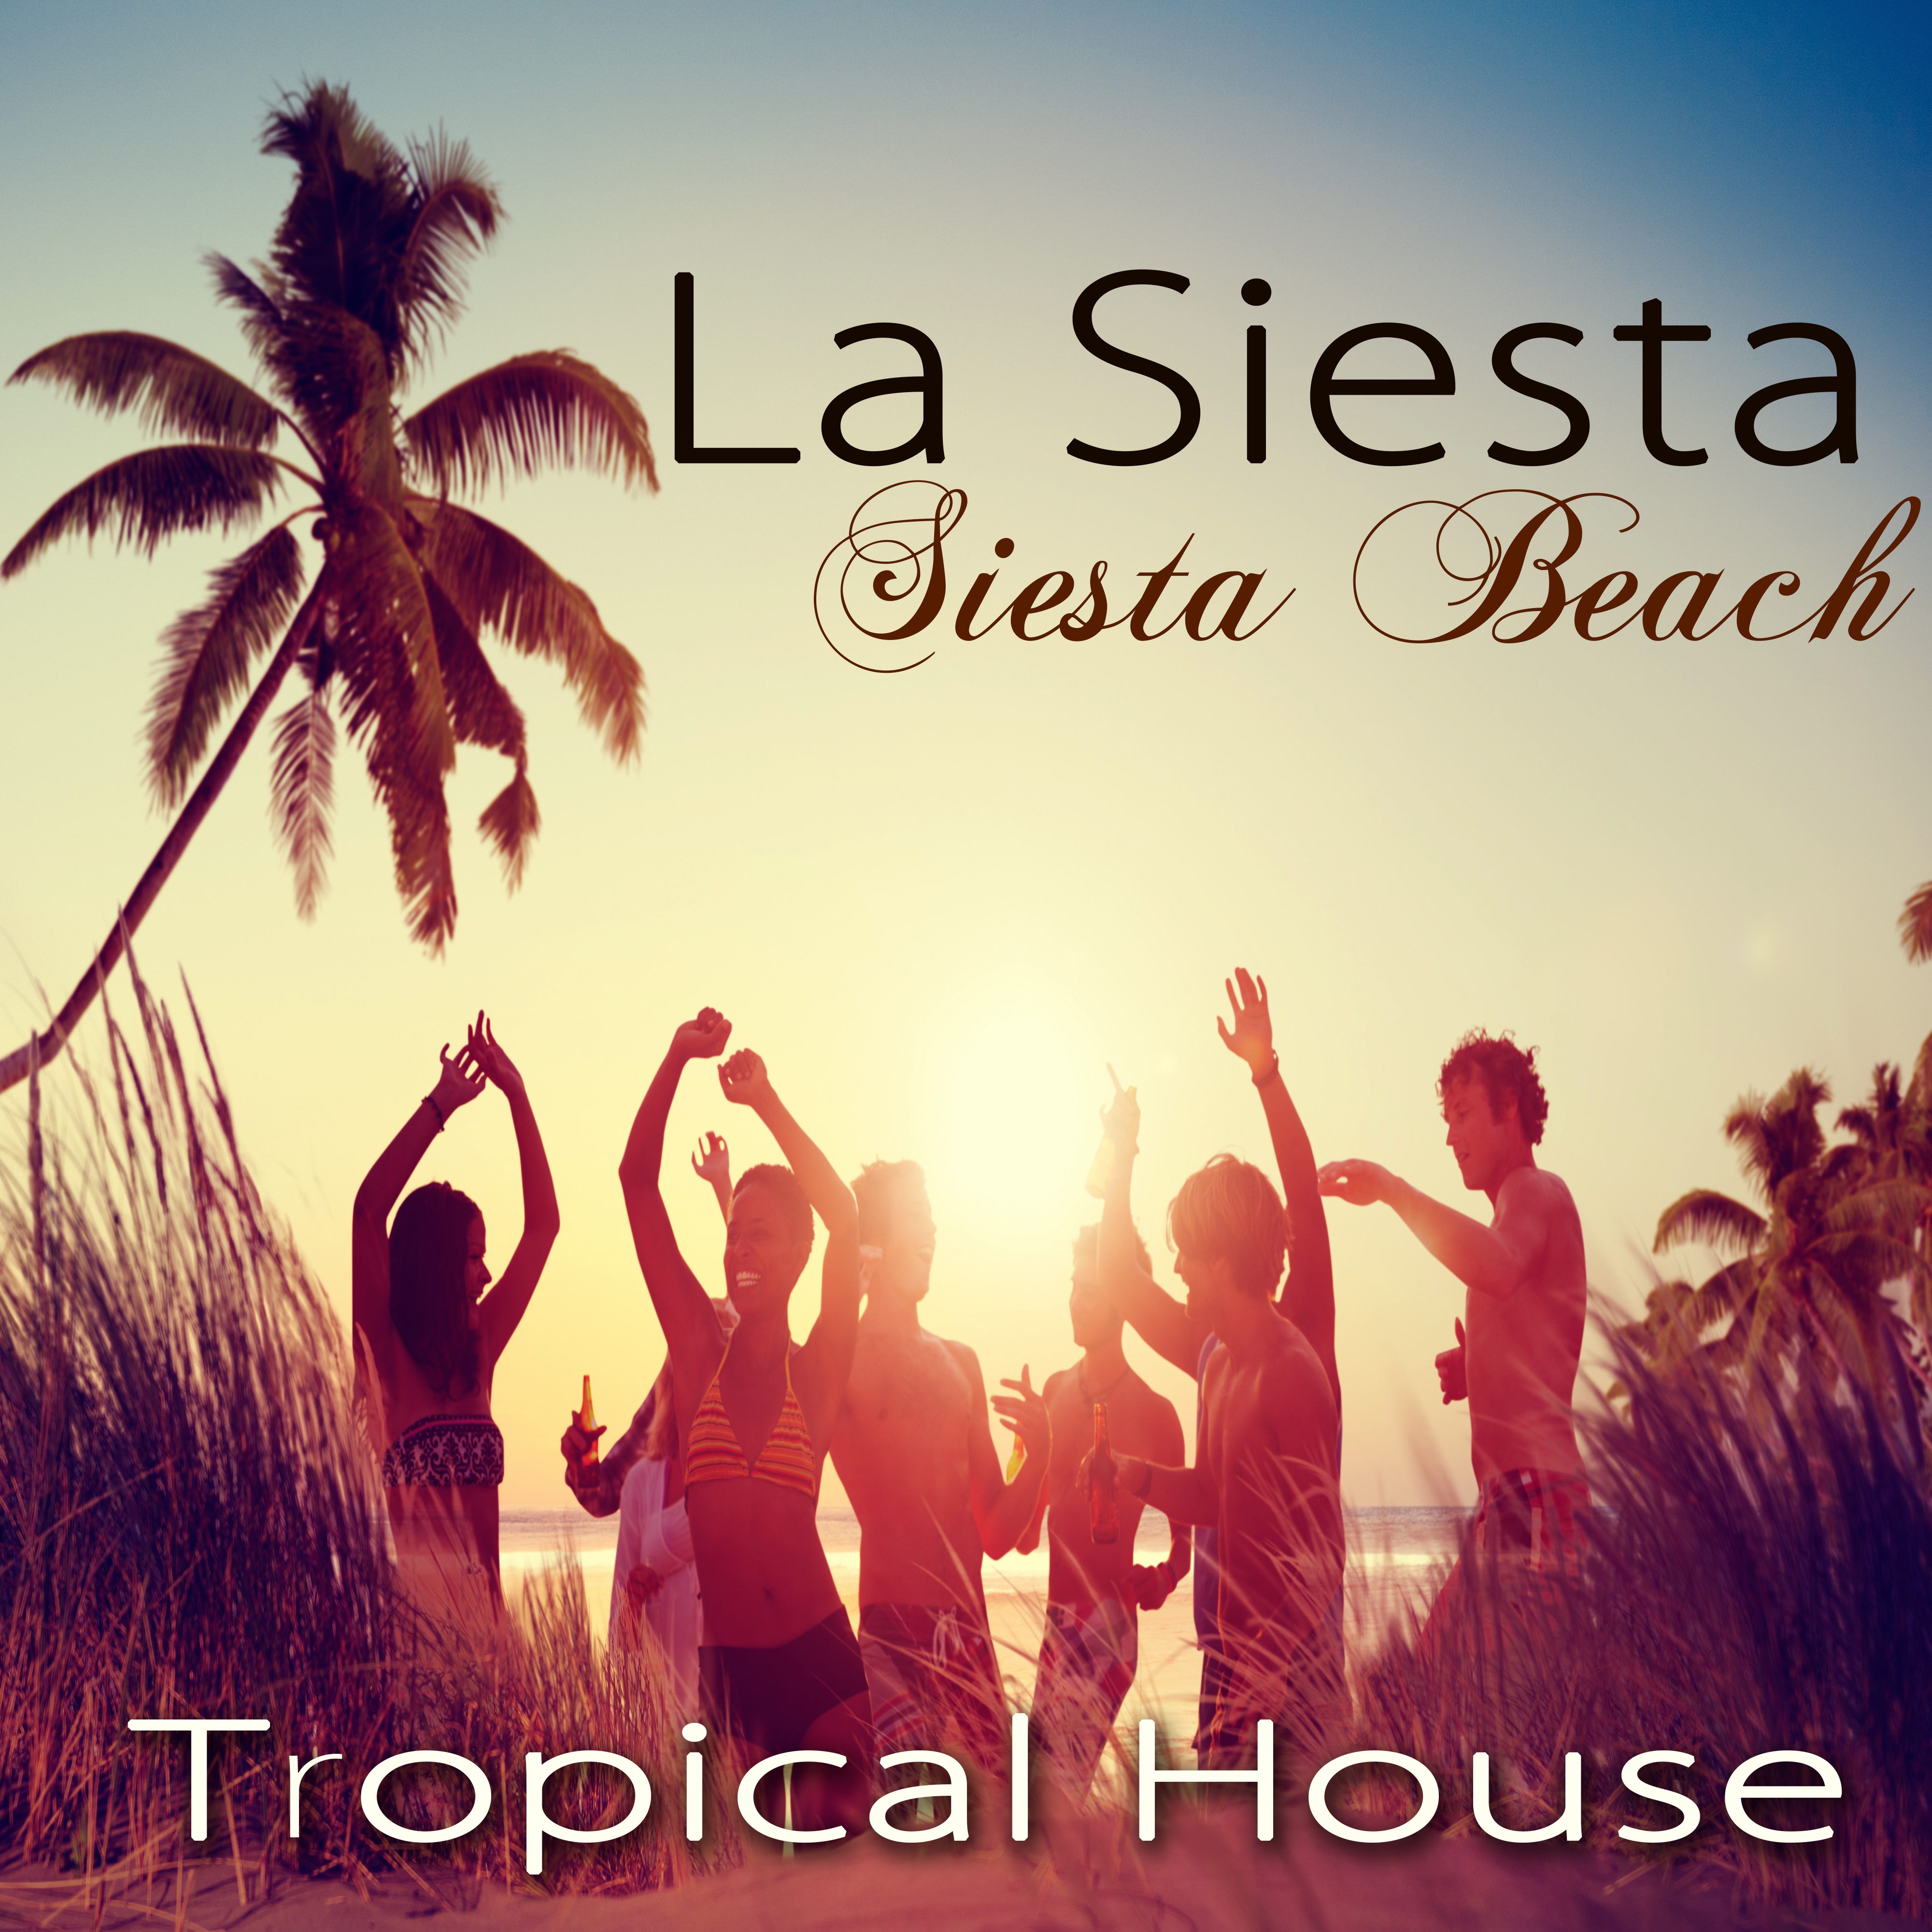 La Siesta - Siesta Beach Tropical House Hot Party Music in Miami